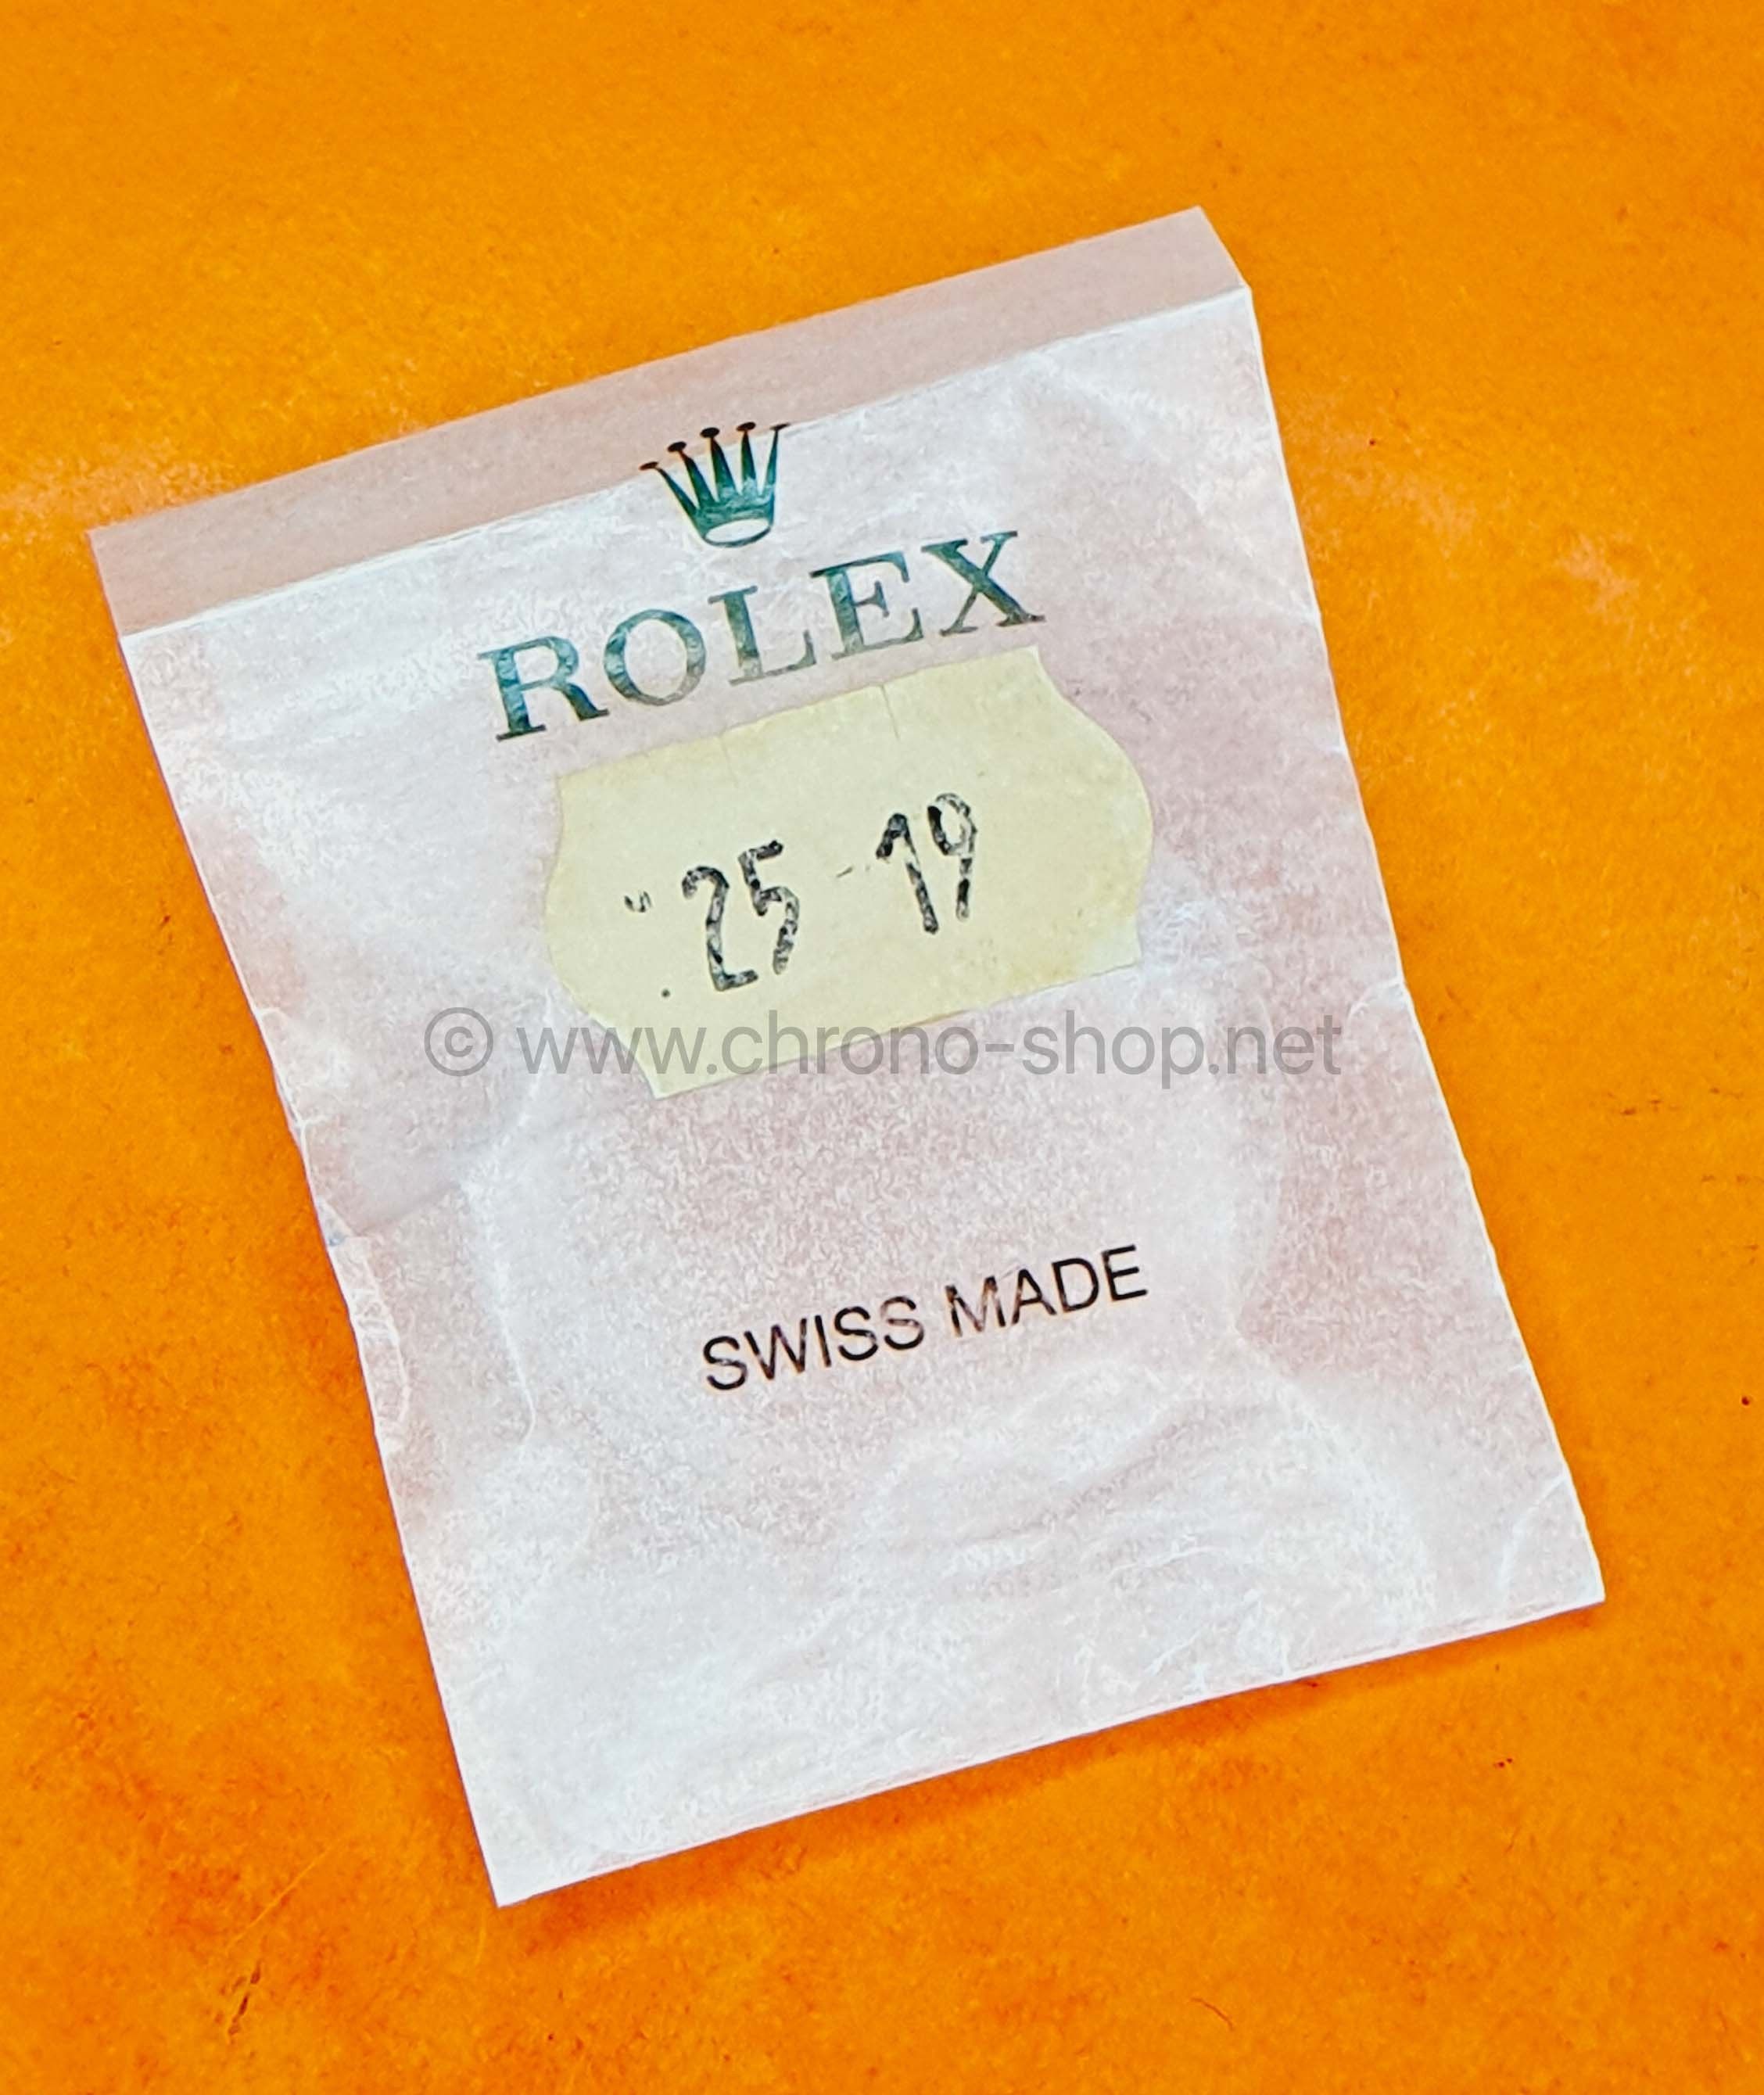 Rolex superdome 19 old stock